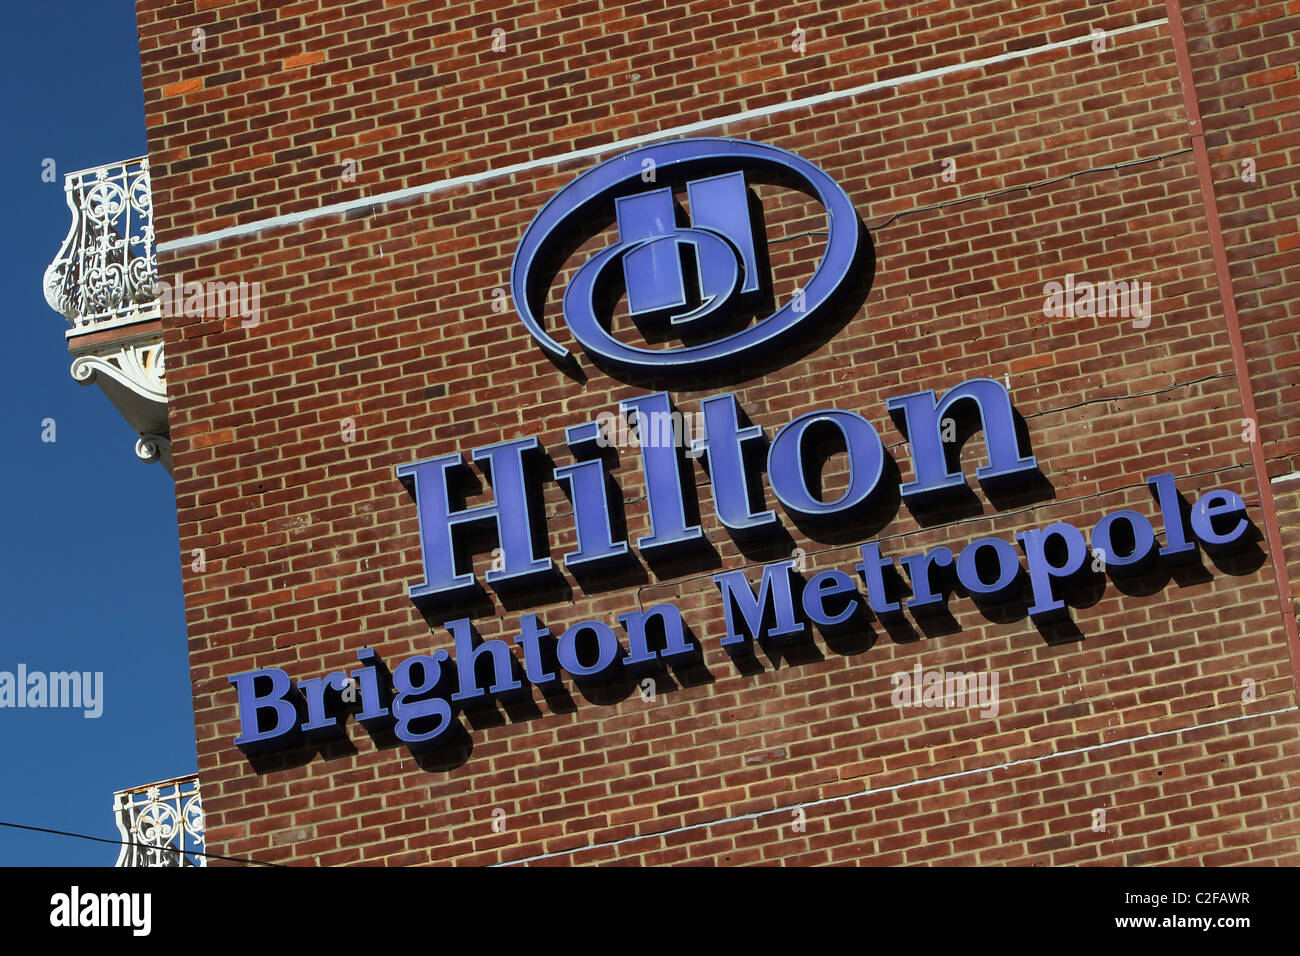 The Hilton Brighton Metropole hotel sign, Brighton, East Sussex, UK. Stock Photo